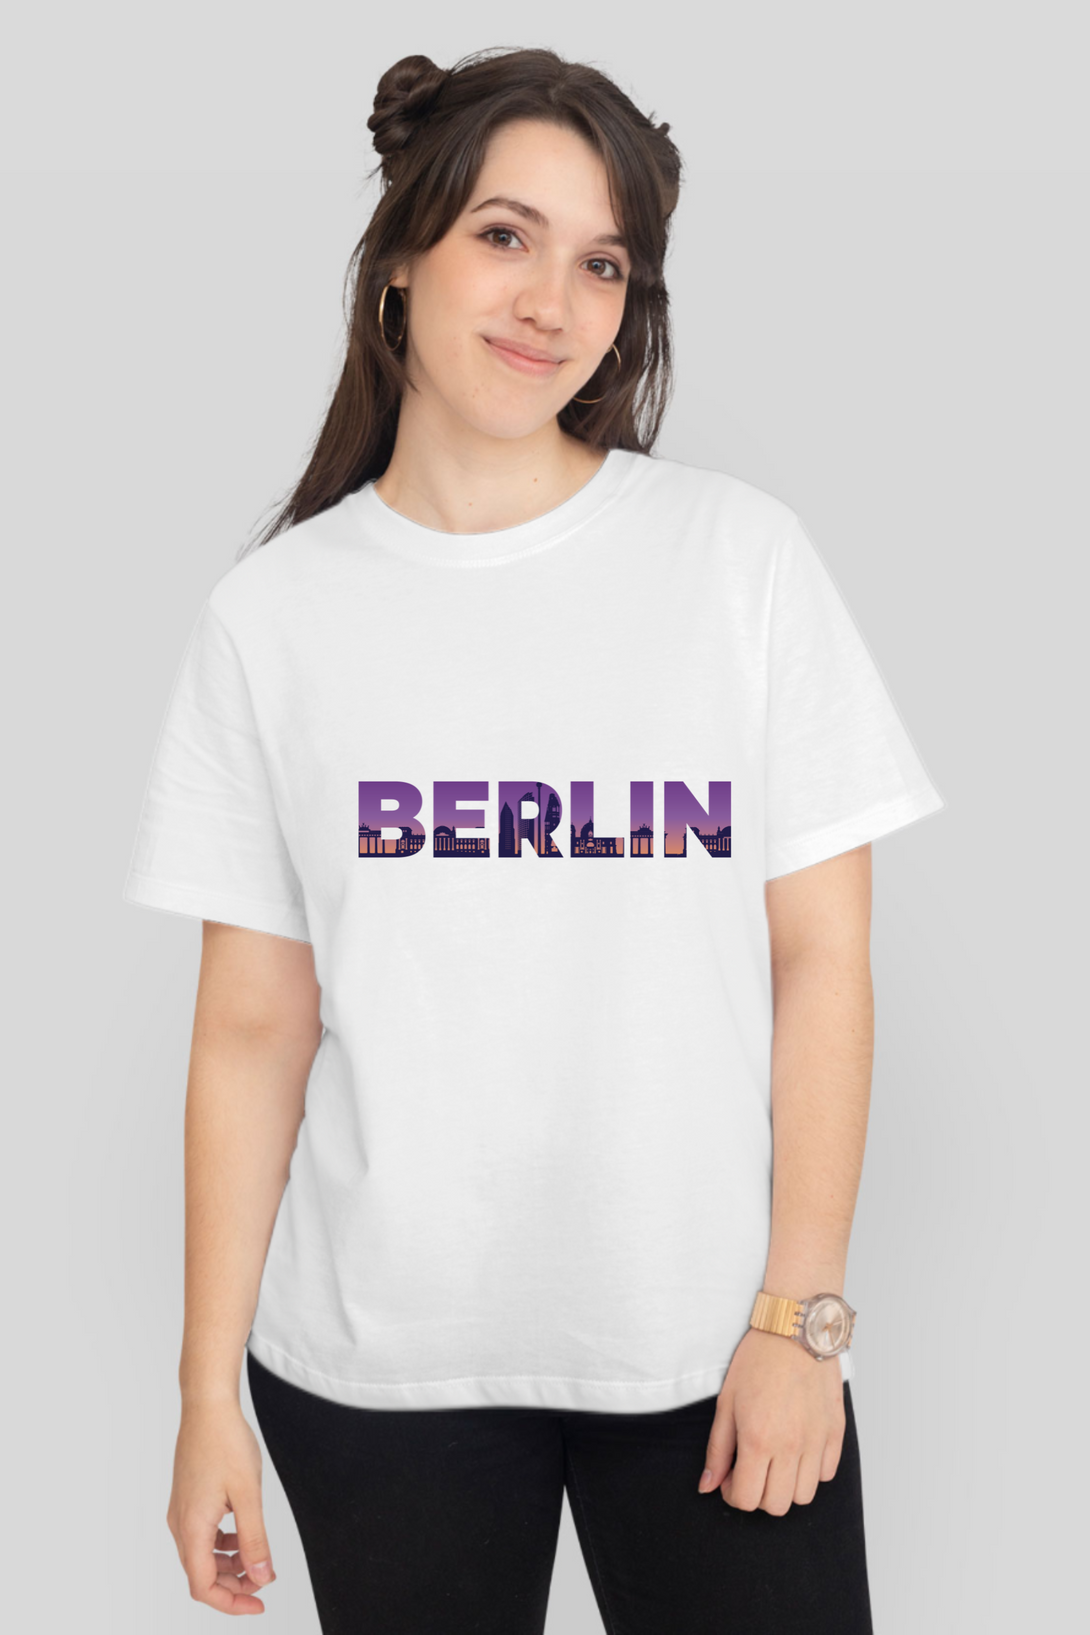 Berlin Skyline Printed T-Shirt For Women - WowWaves - 10